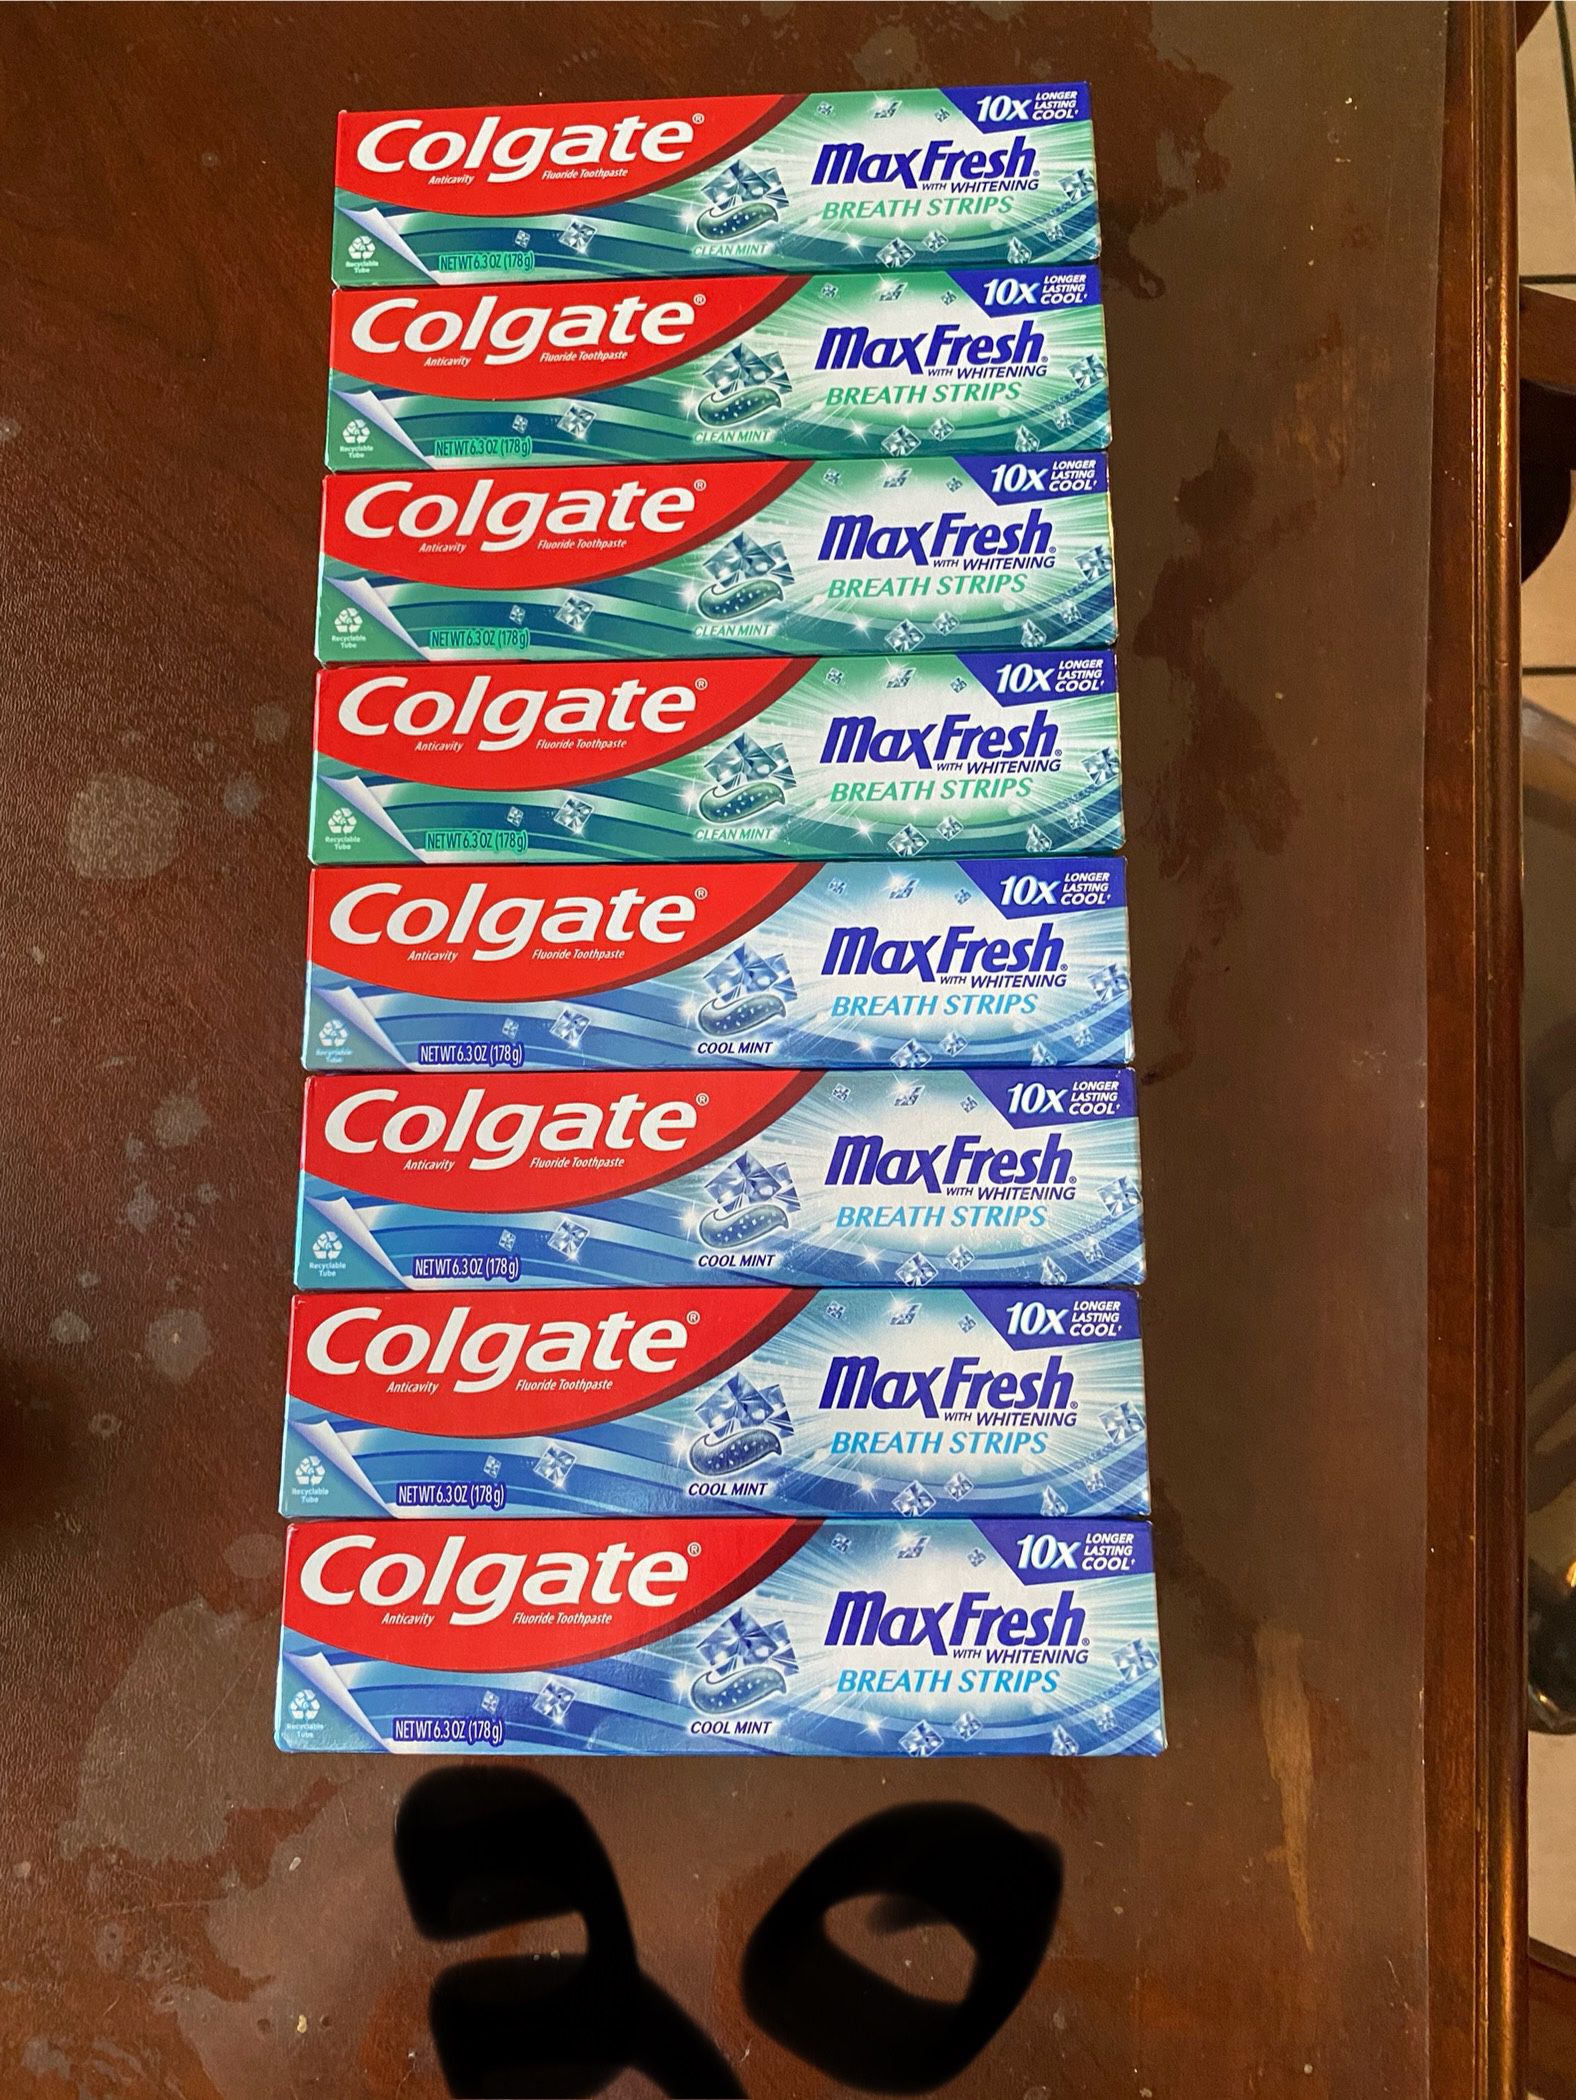 Toothpaste 